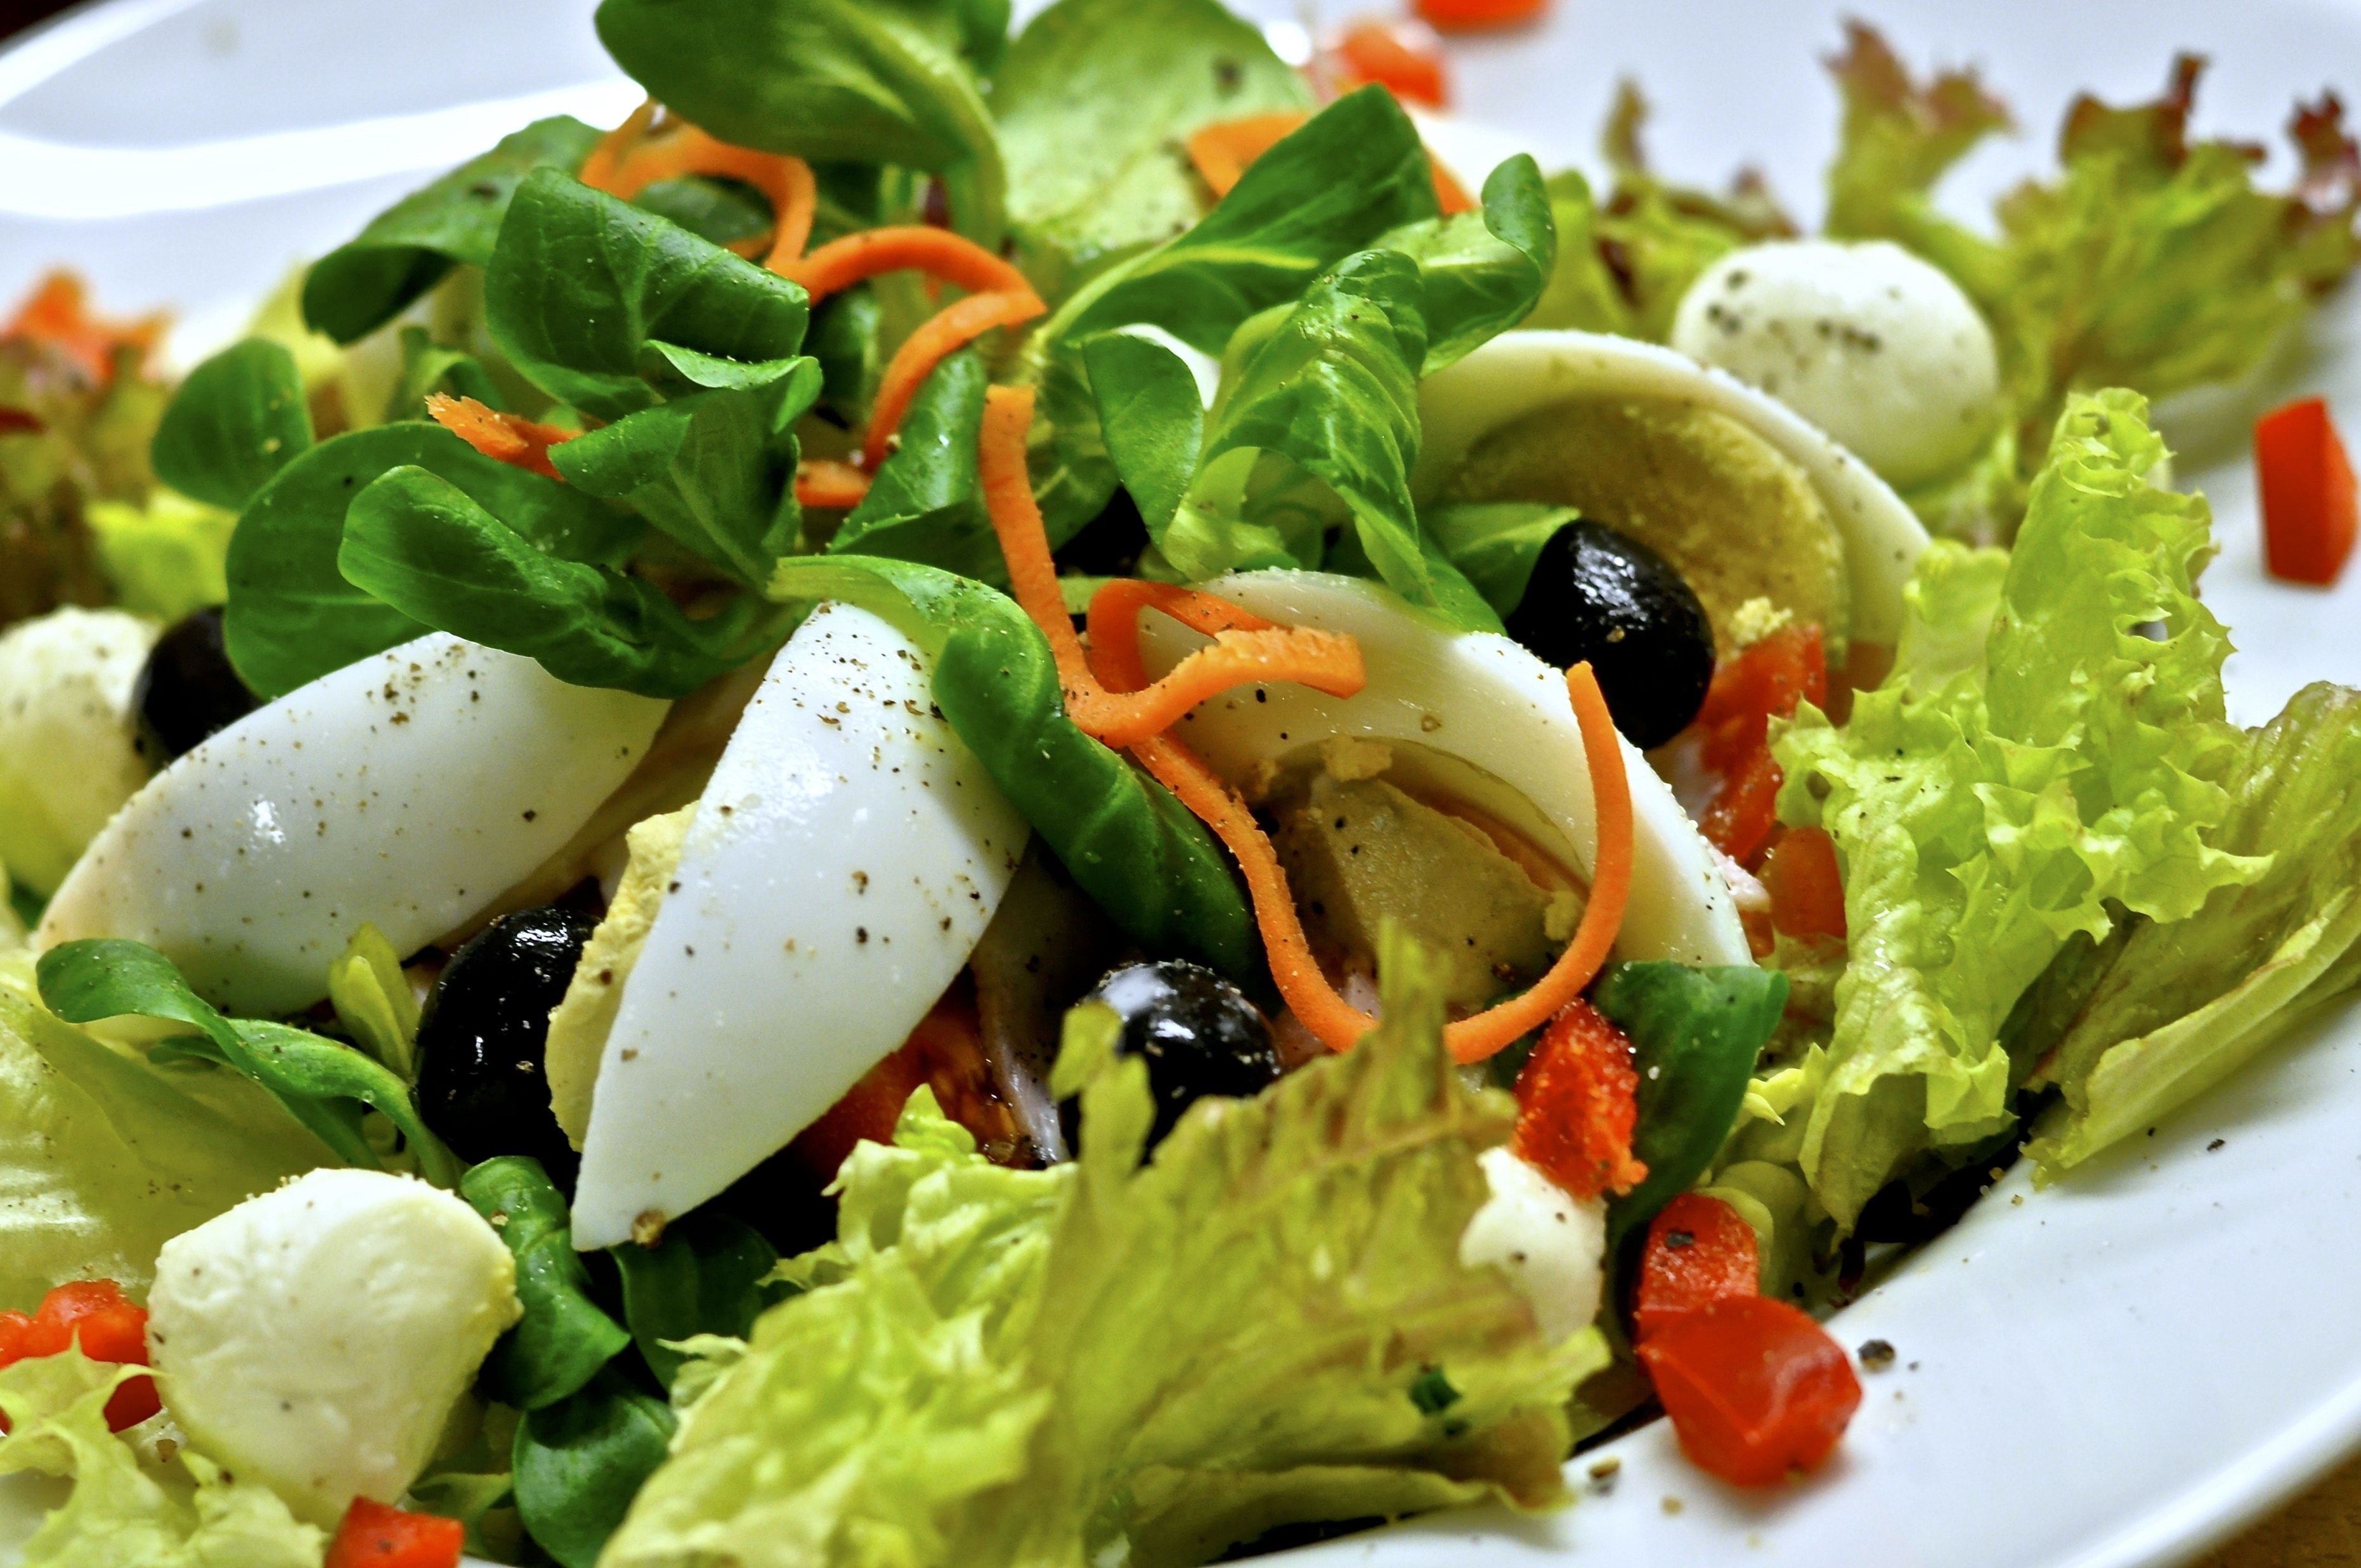 Vitamins, Eat, Salad, Healthy, healthy eating, food and drink